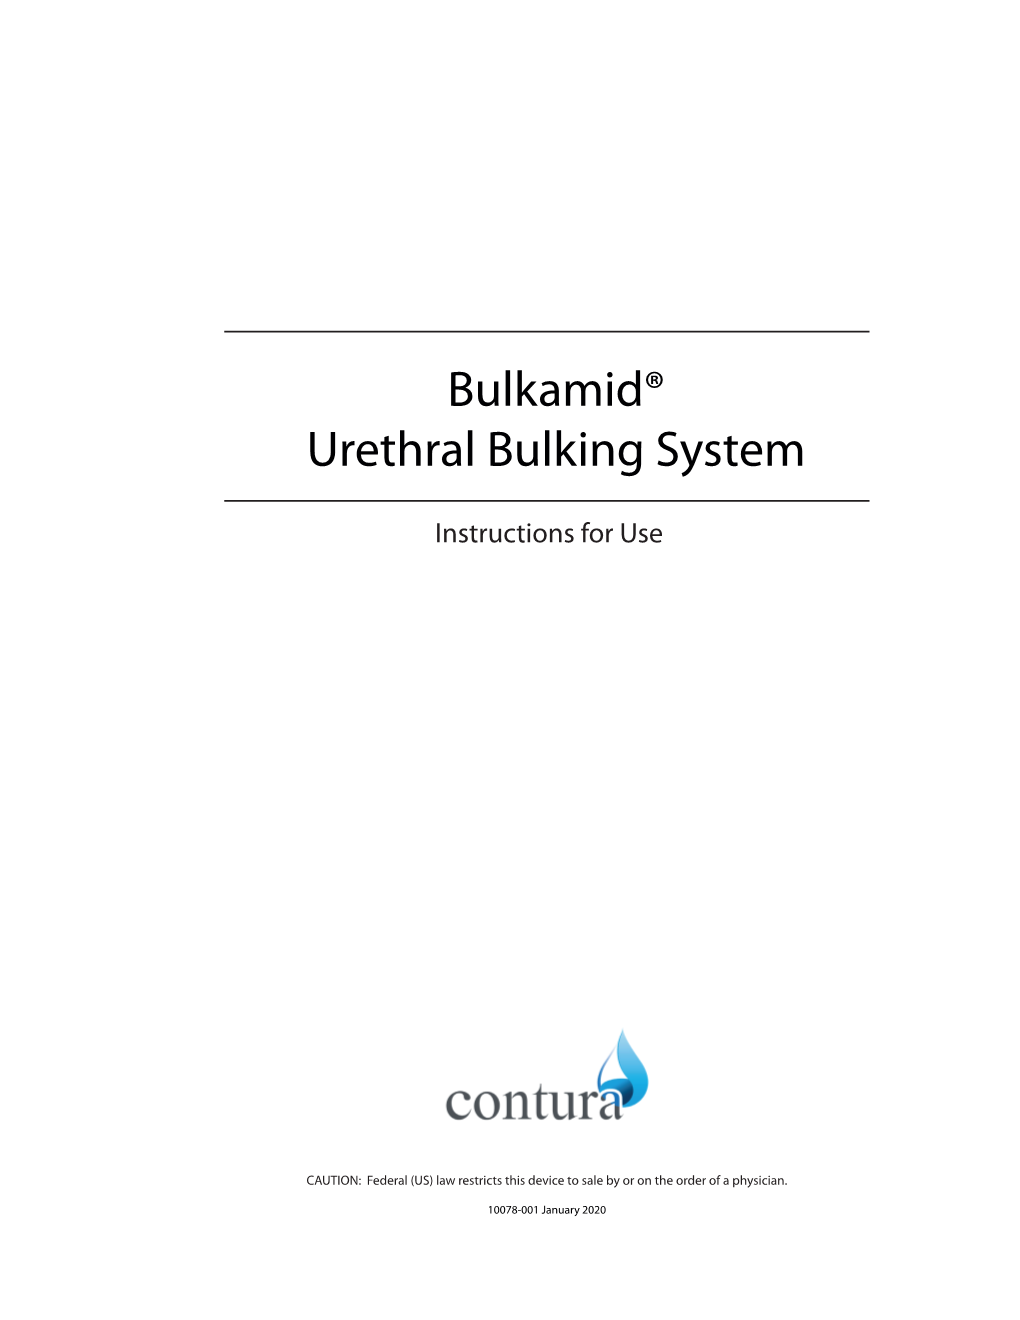 Bulkamid® Urethral Bulking System